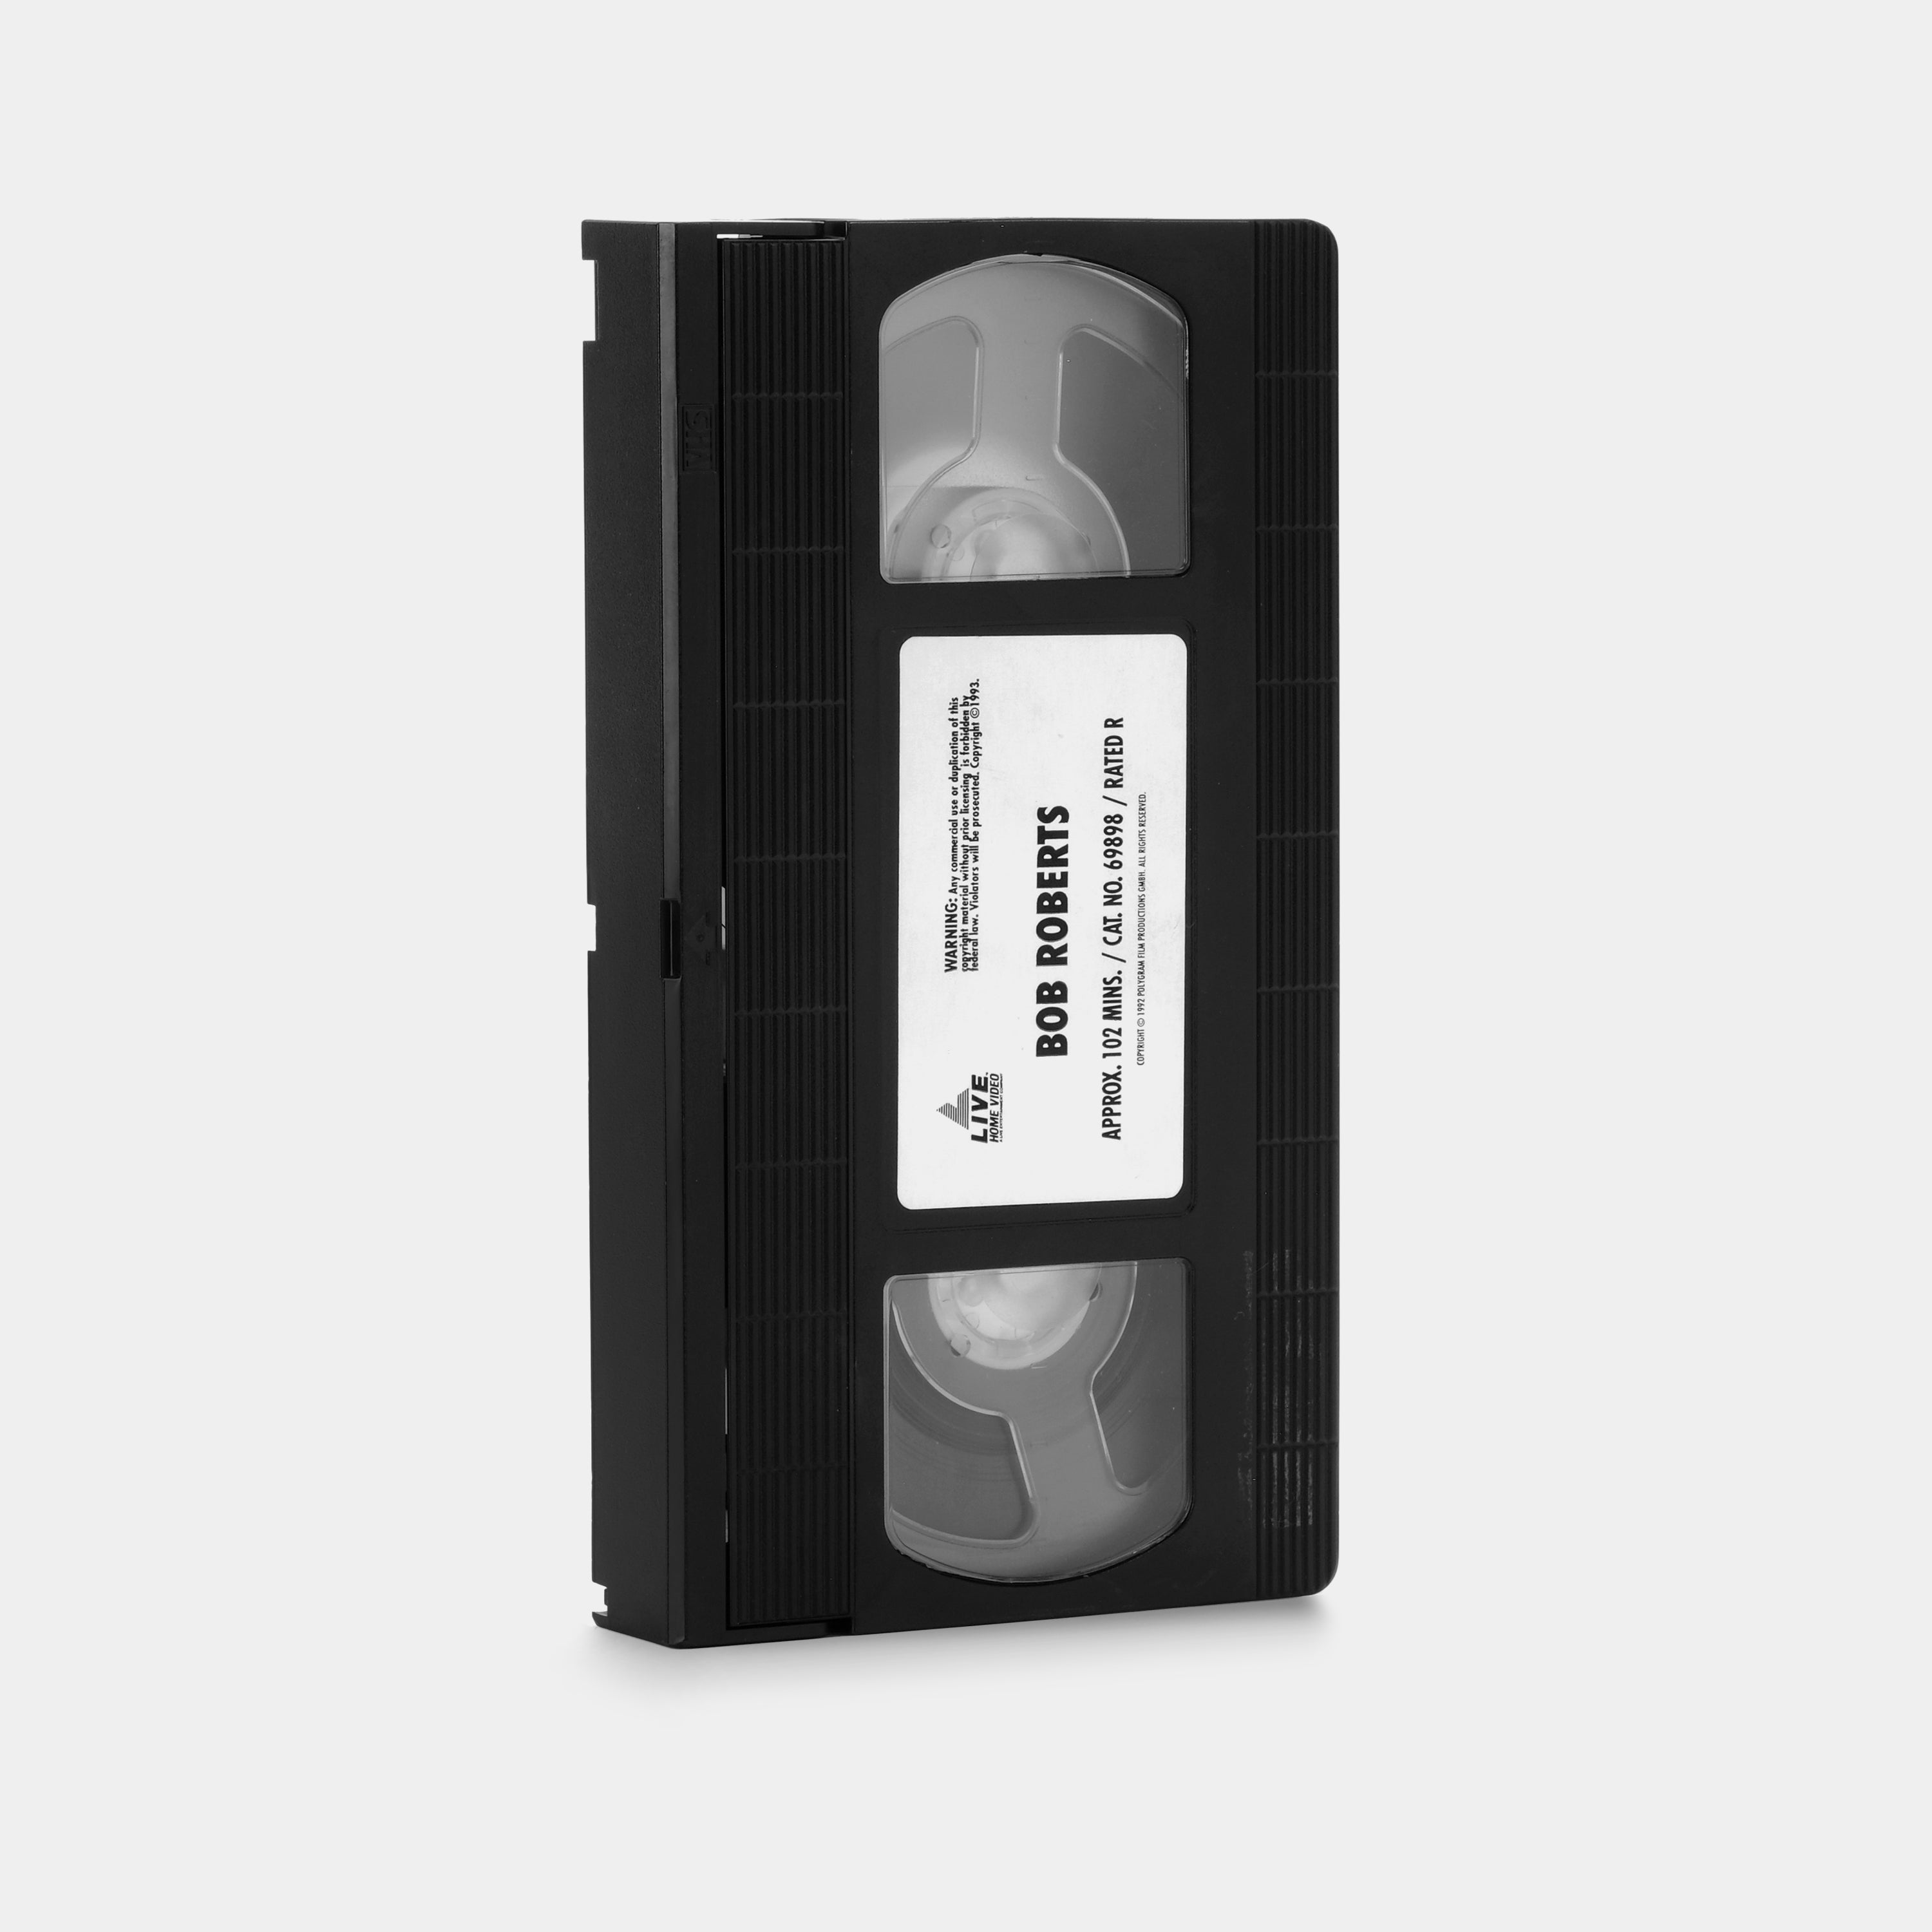 Bob Roberts VHS Tape